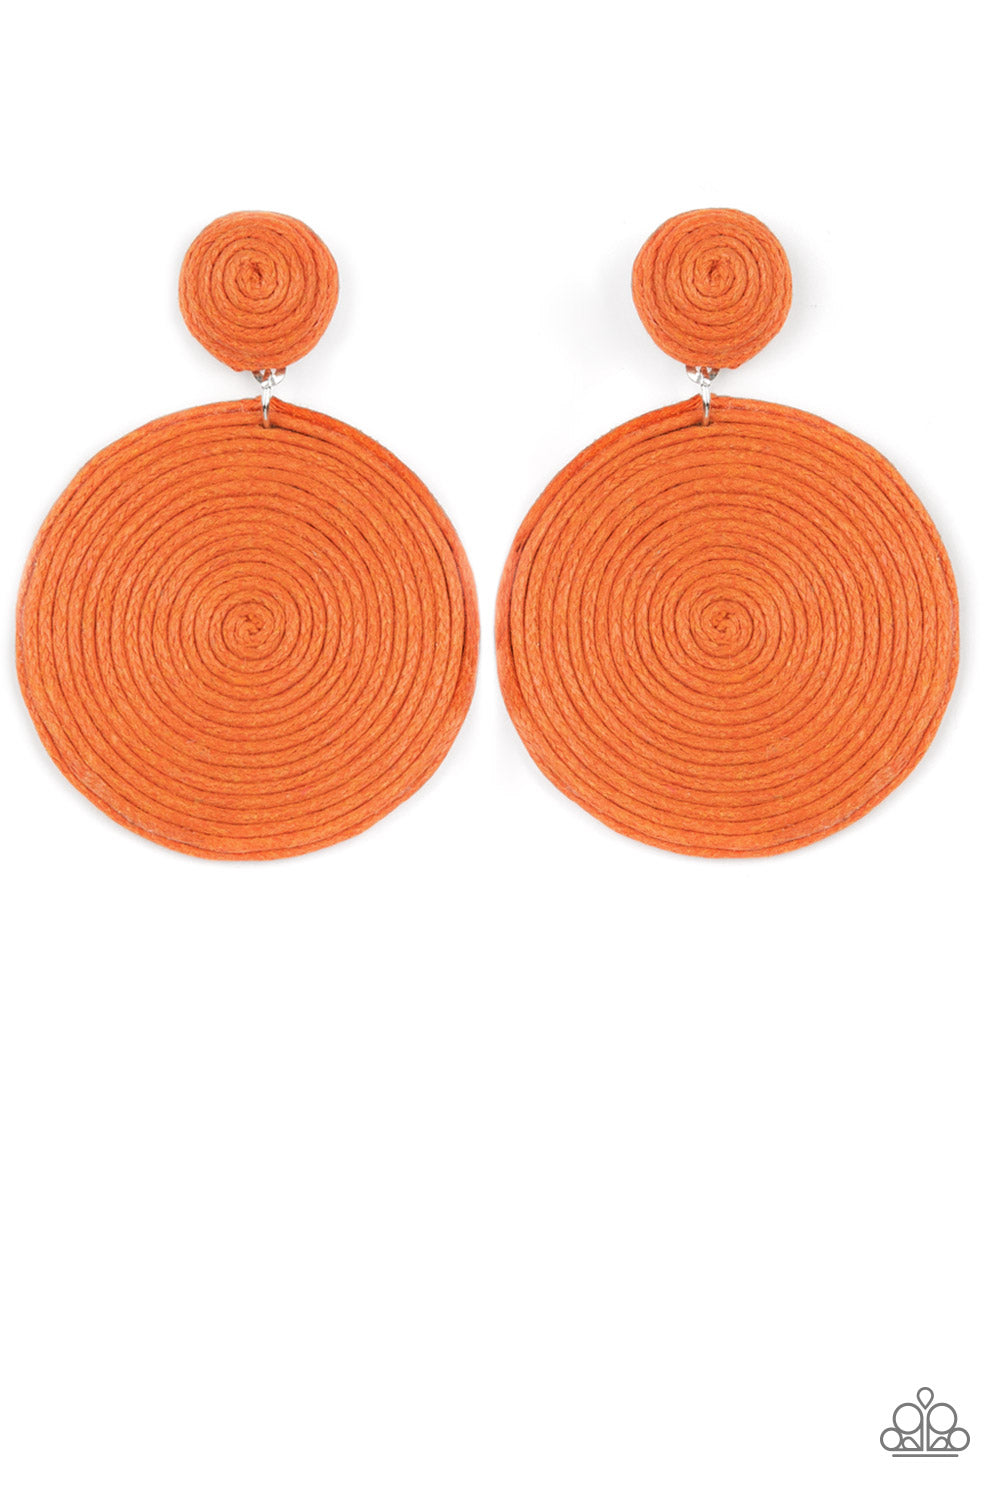 Be Adored Jewelry Circulate The Room Orange Paparazzi Earring